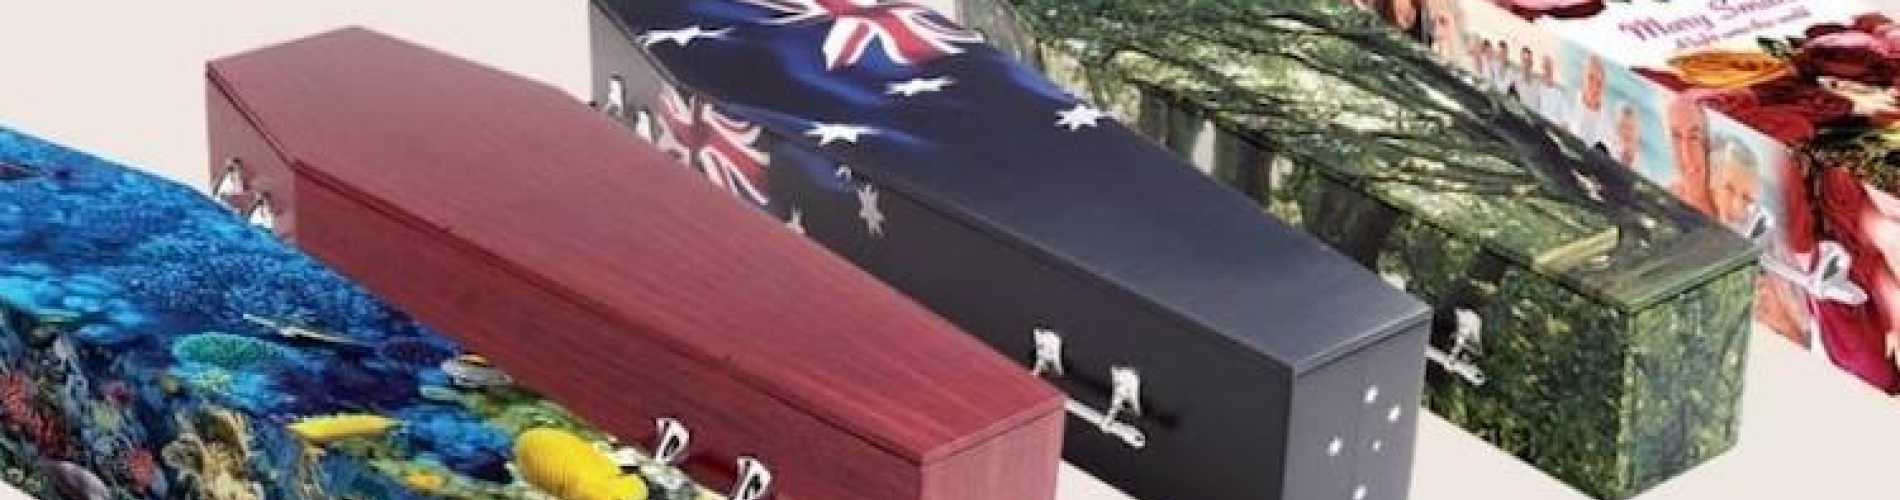 Lifeart Coffins